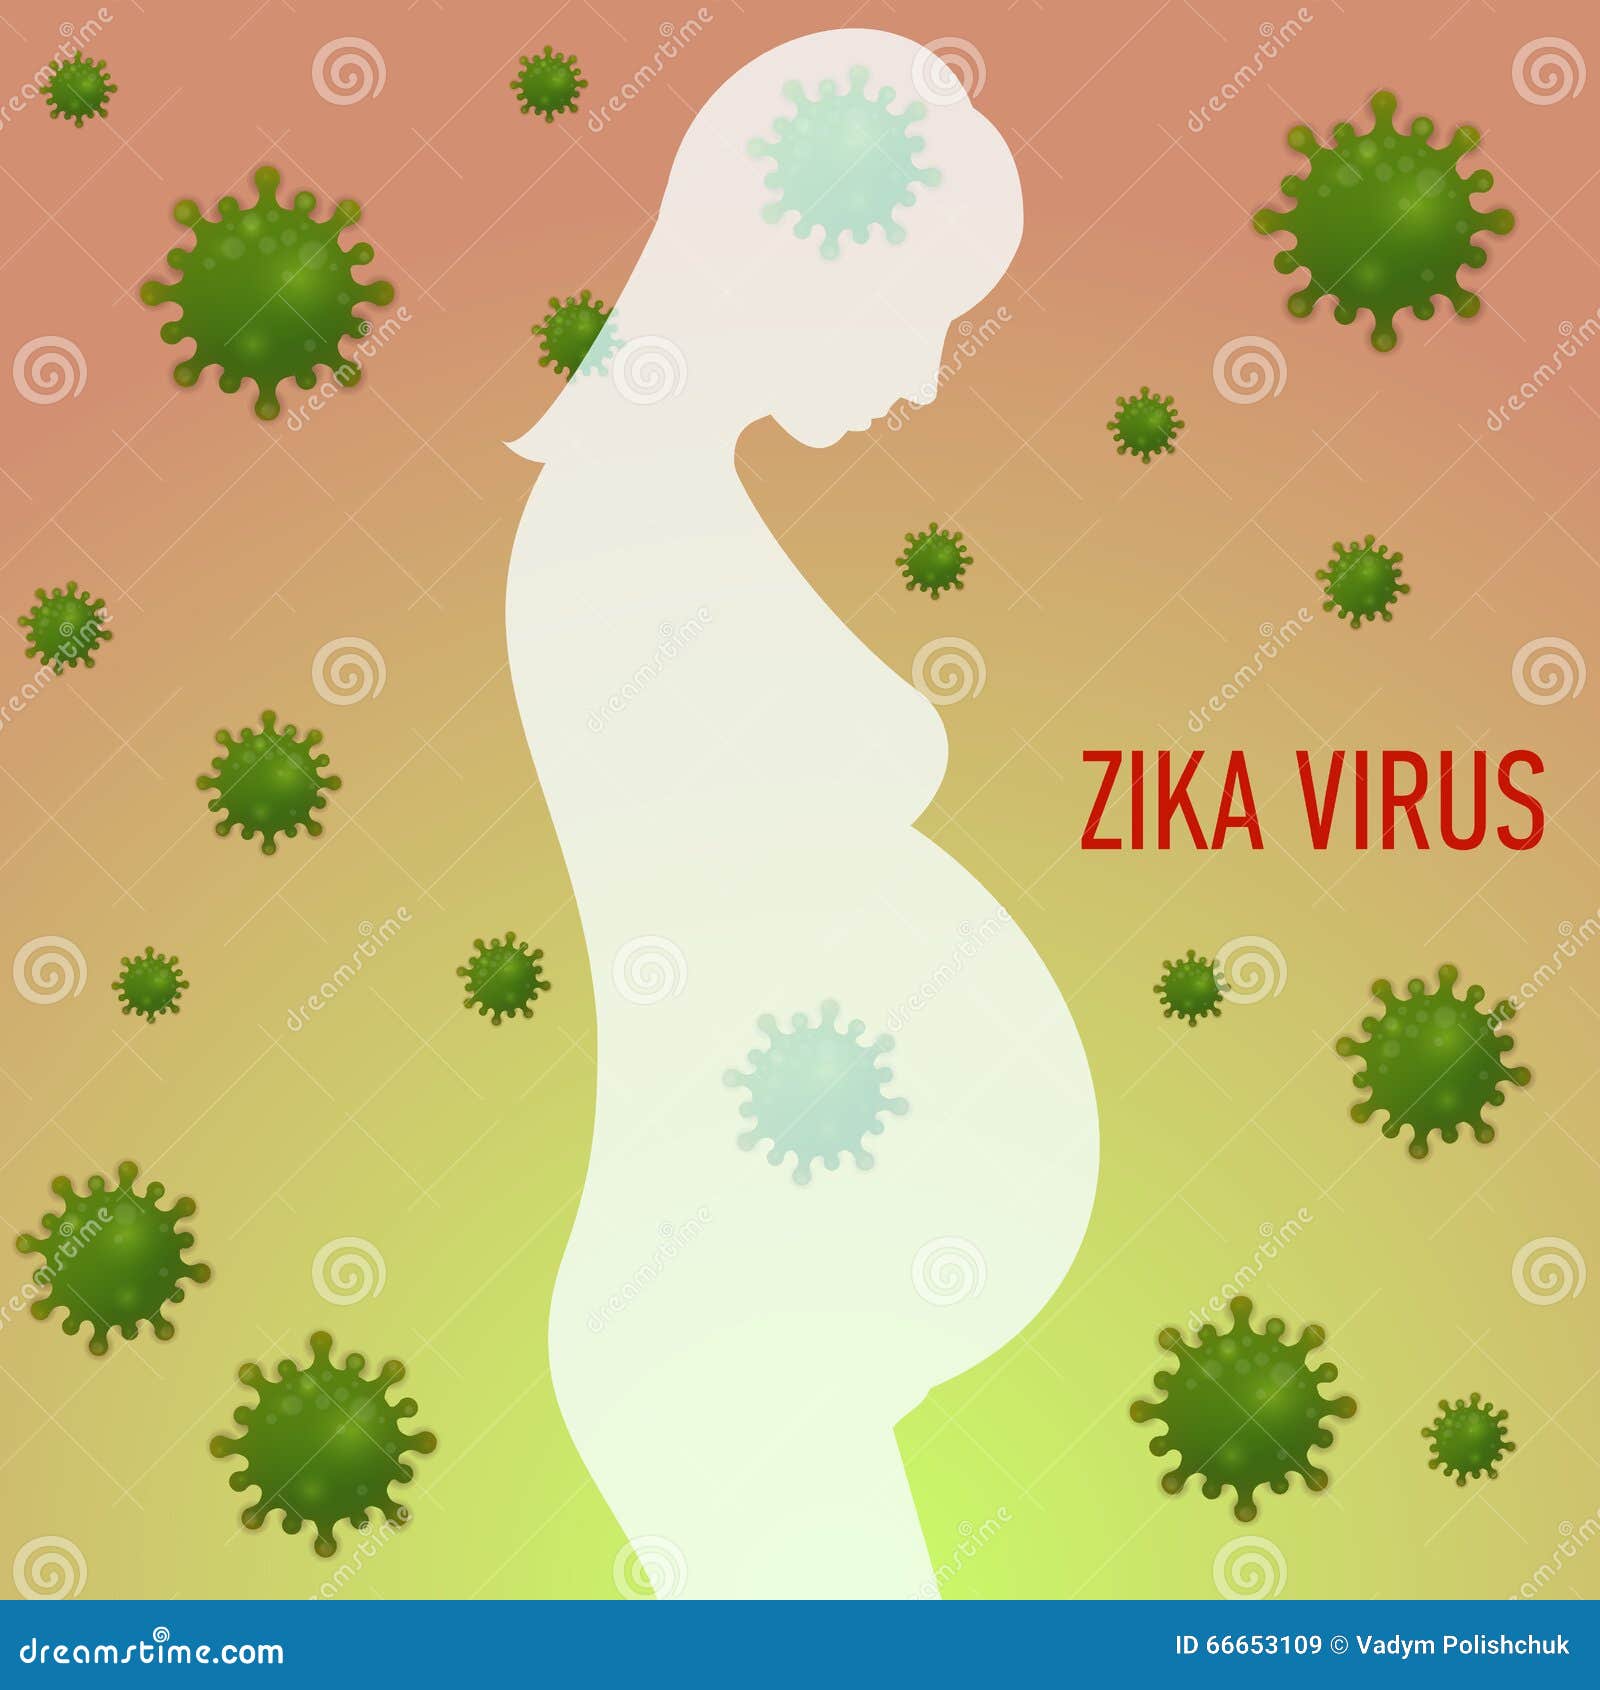 graphic concept outbreak of new virus zika.